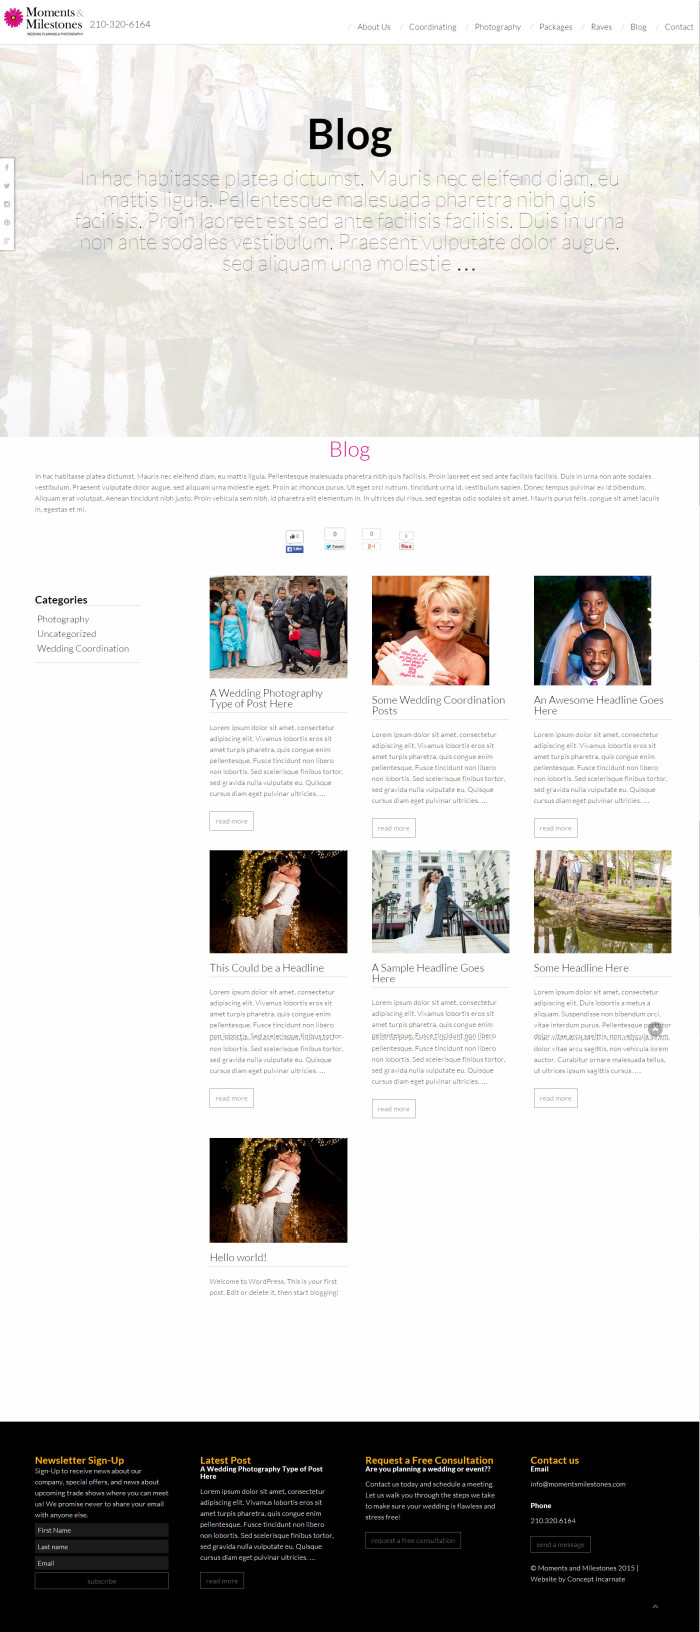 Moments and Milestones Website Re-Design